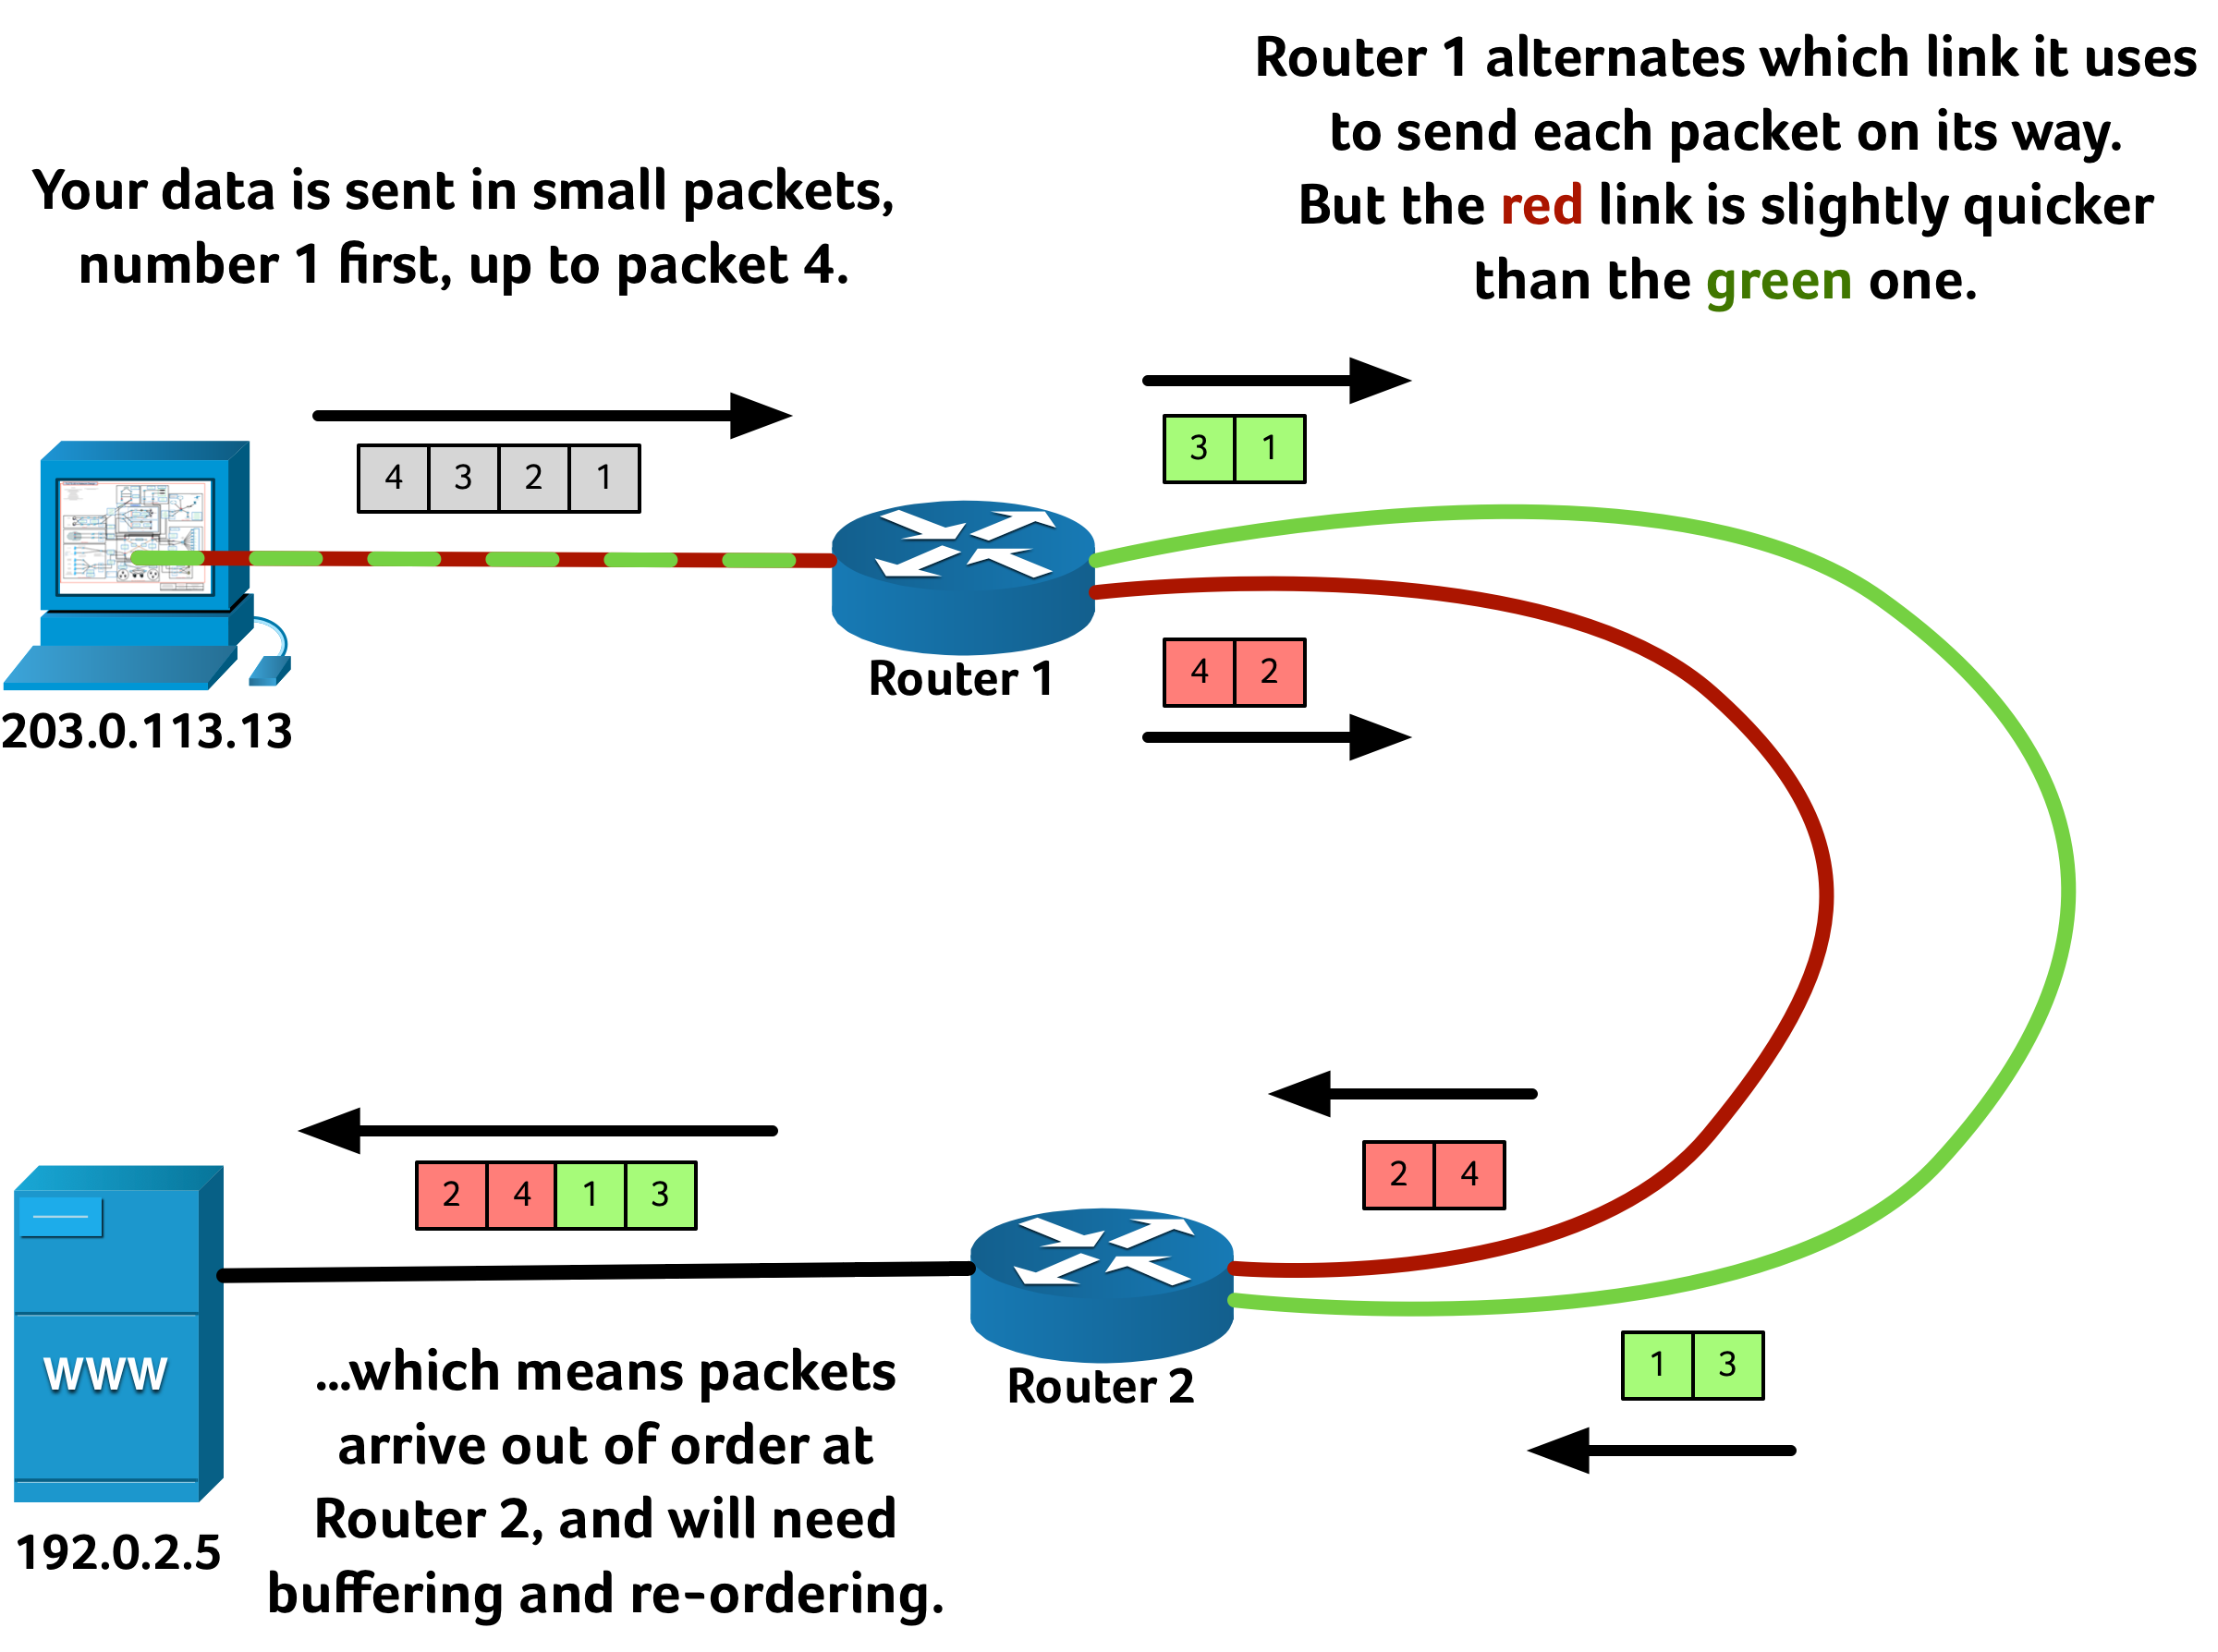 Round robin link aggregation diagram